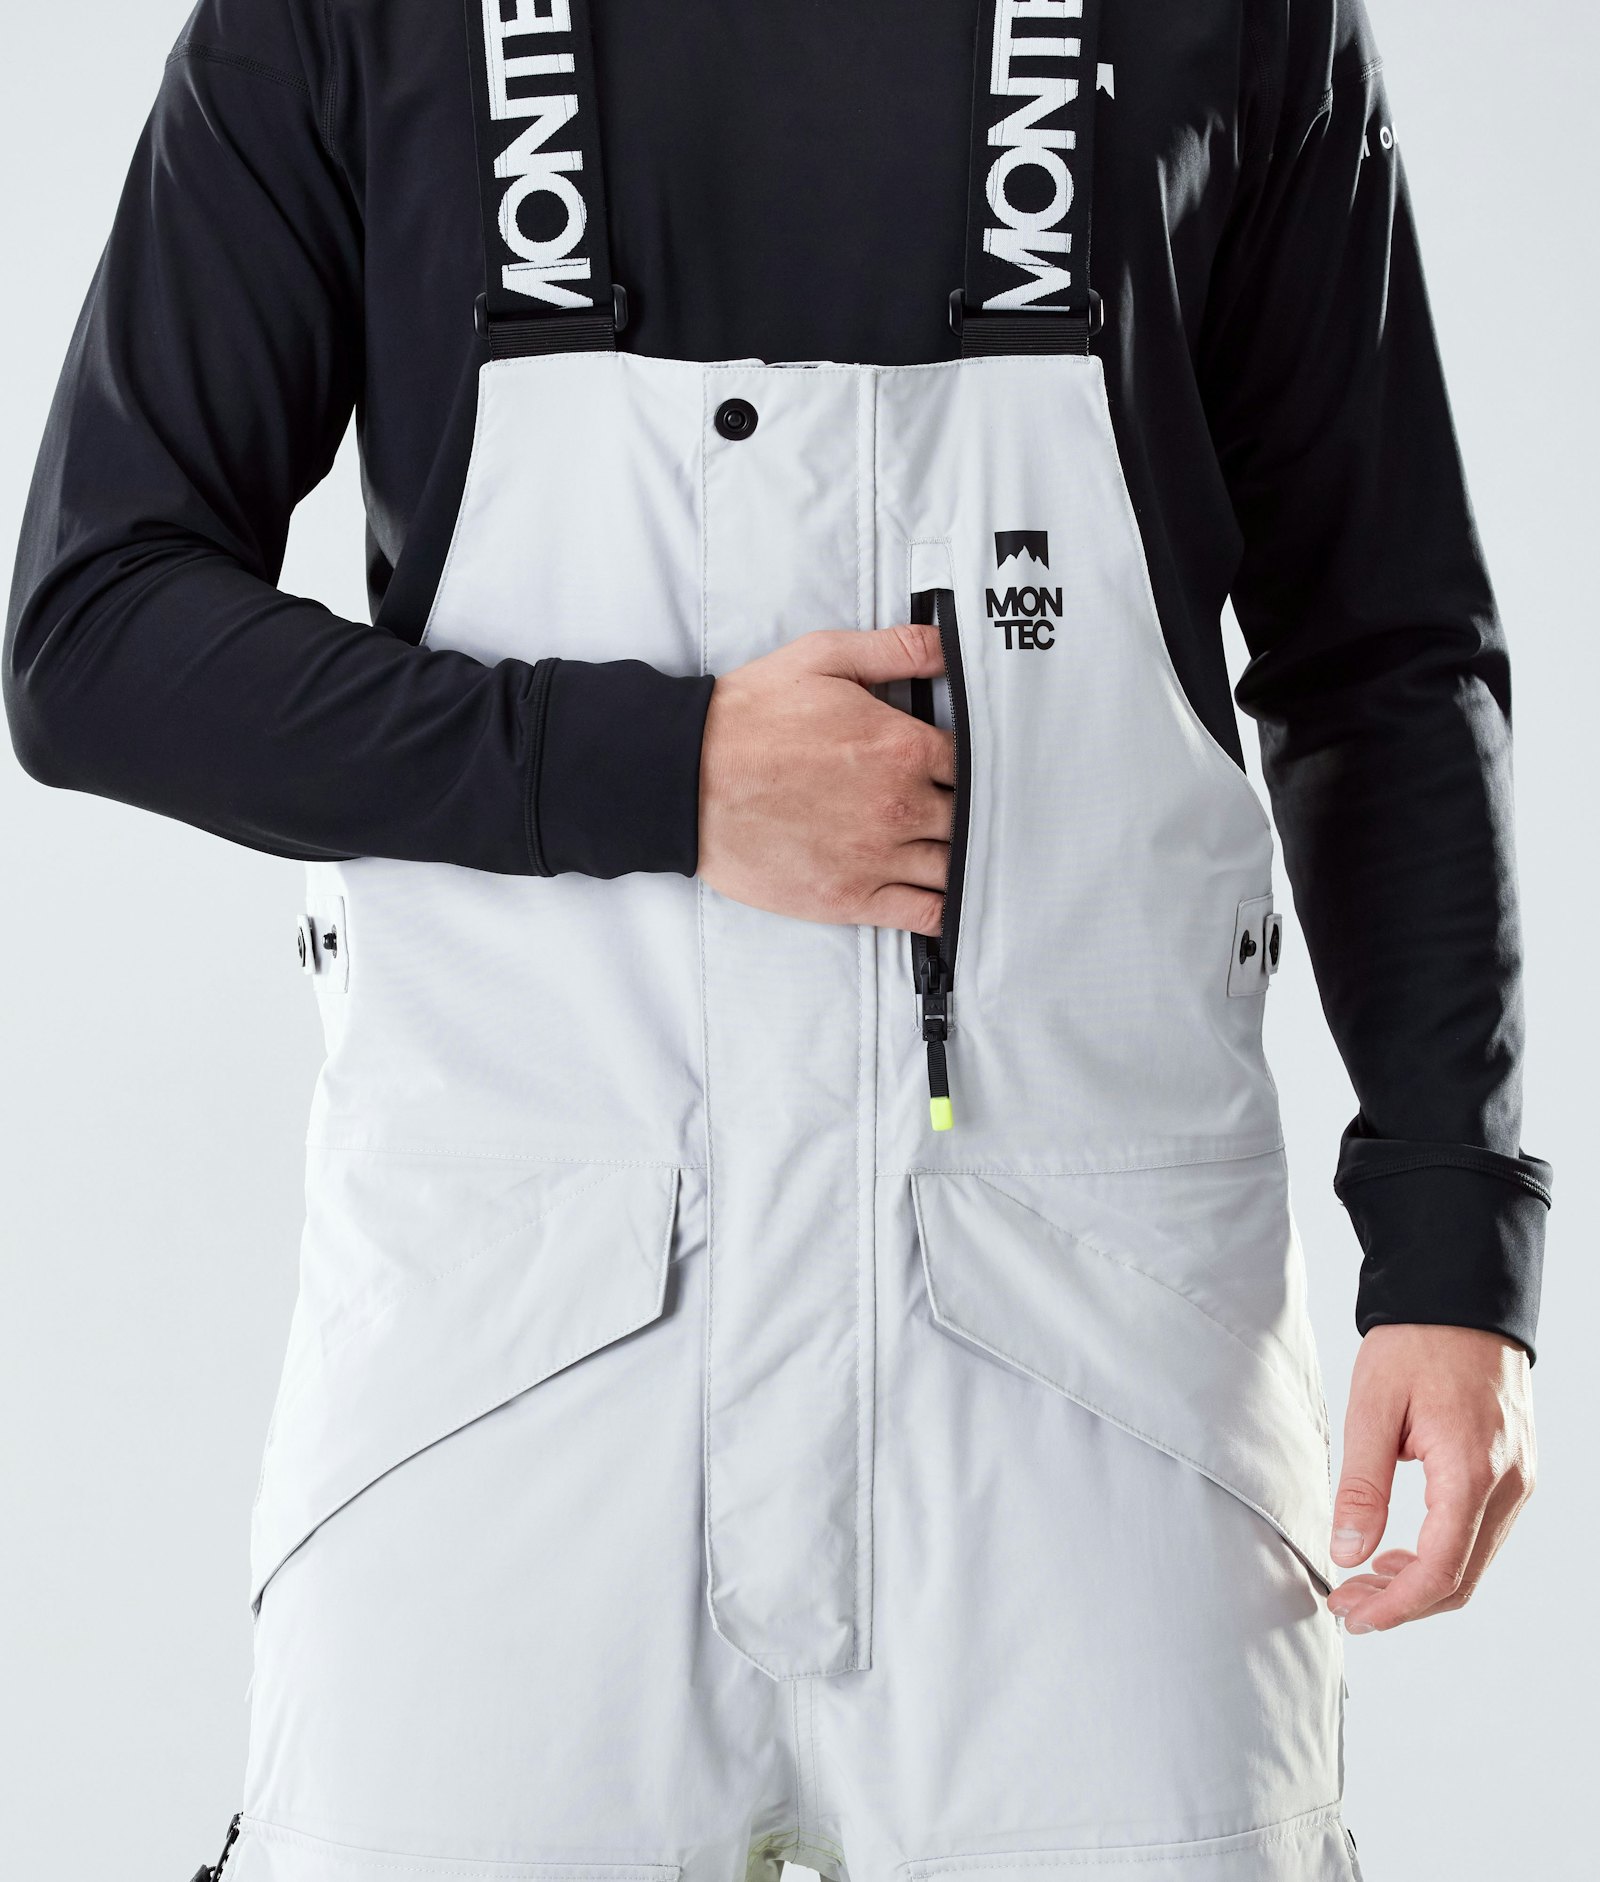 Fawk 2020 Kalhoty na Snowboard Pánské Light Grey/Neon Yellow/Black